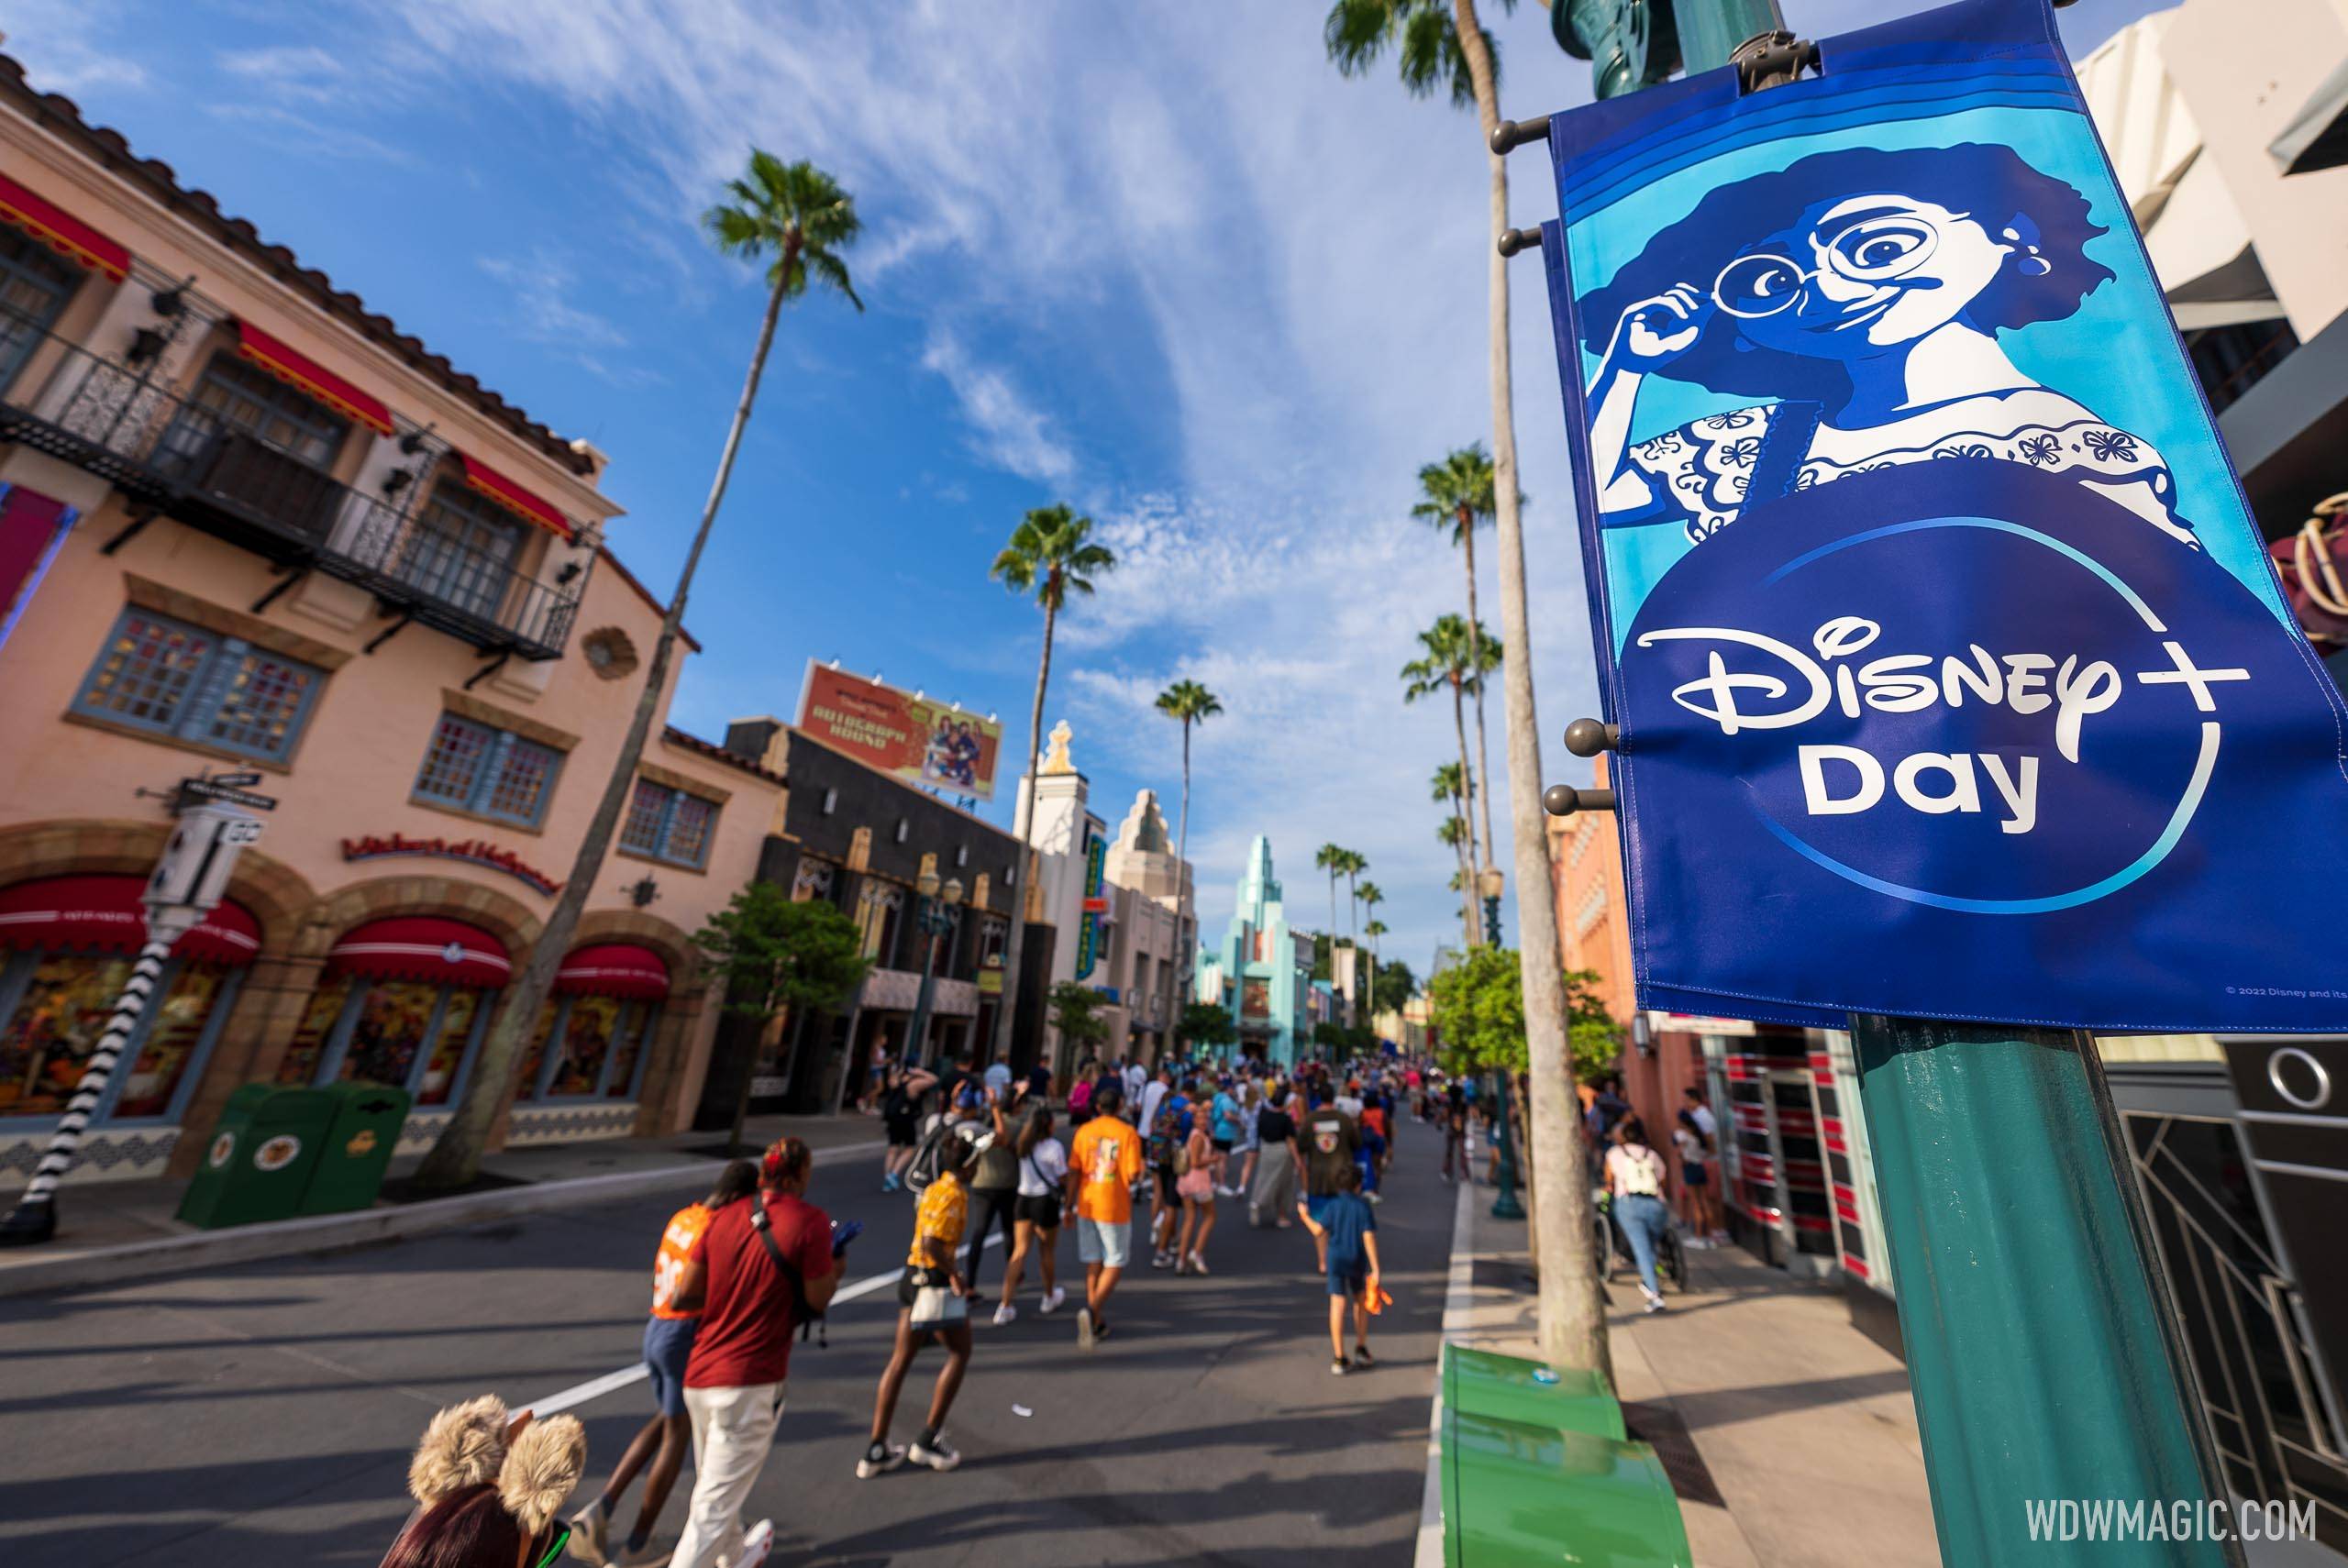 Disney+ Day arrives at Disney's Hollywood Studios in Walt Disney World